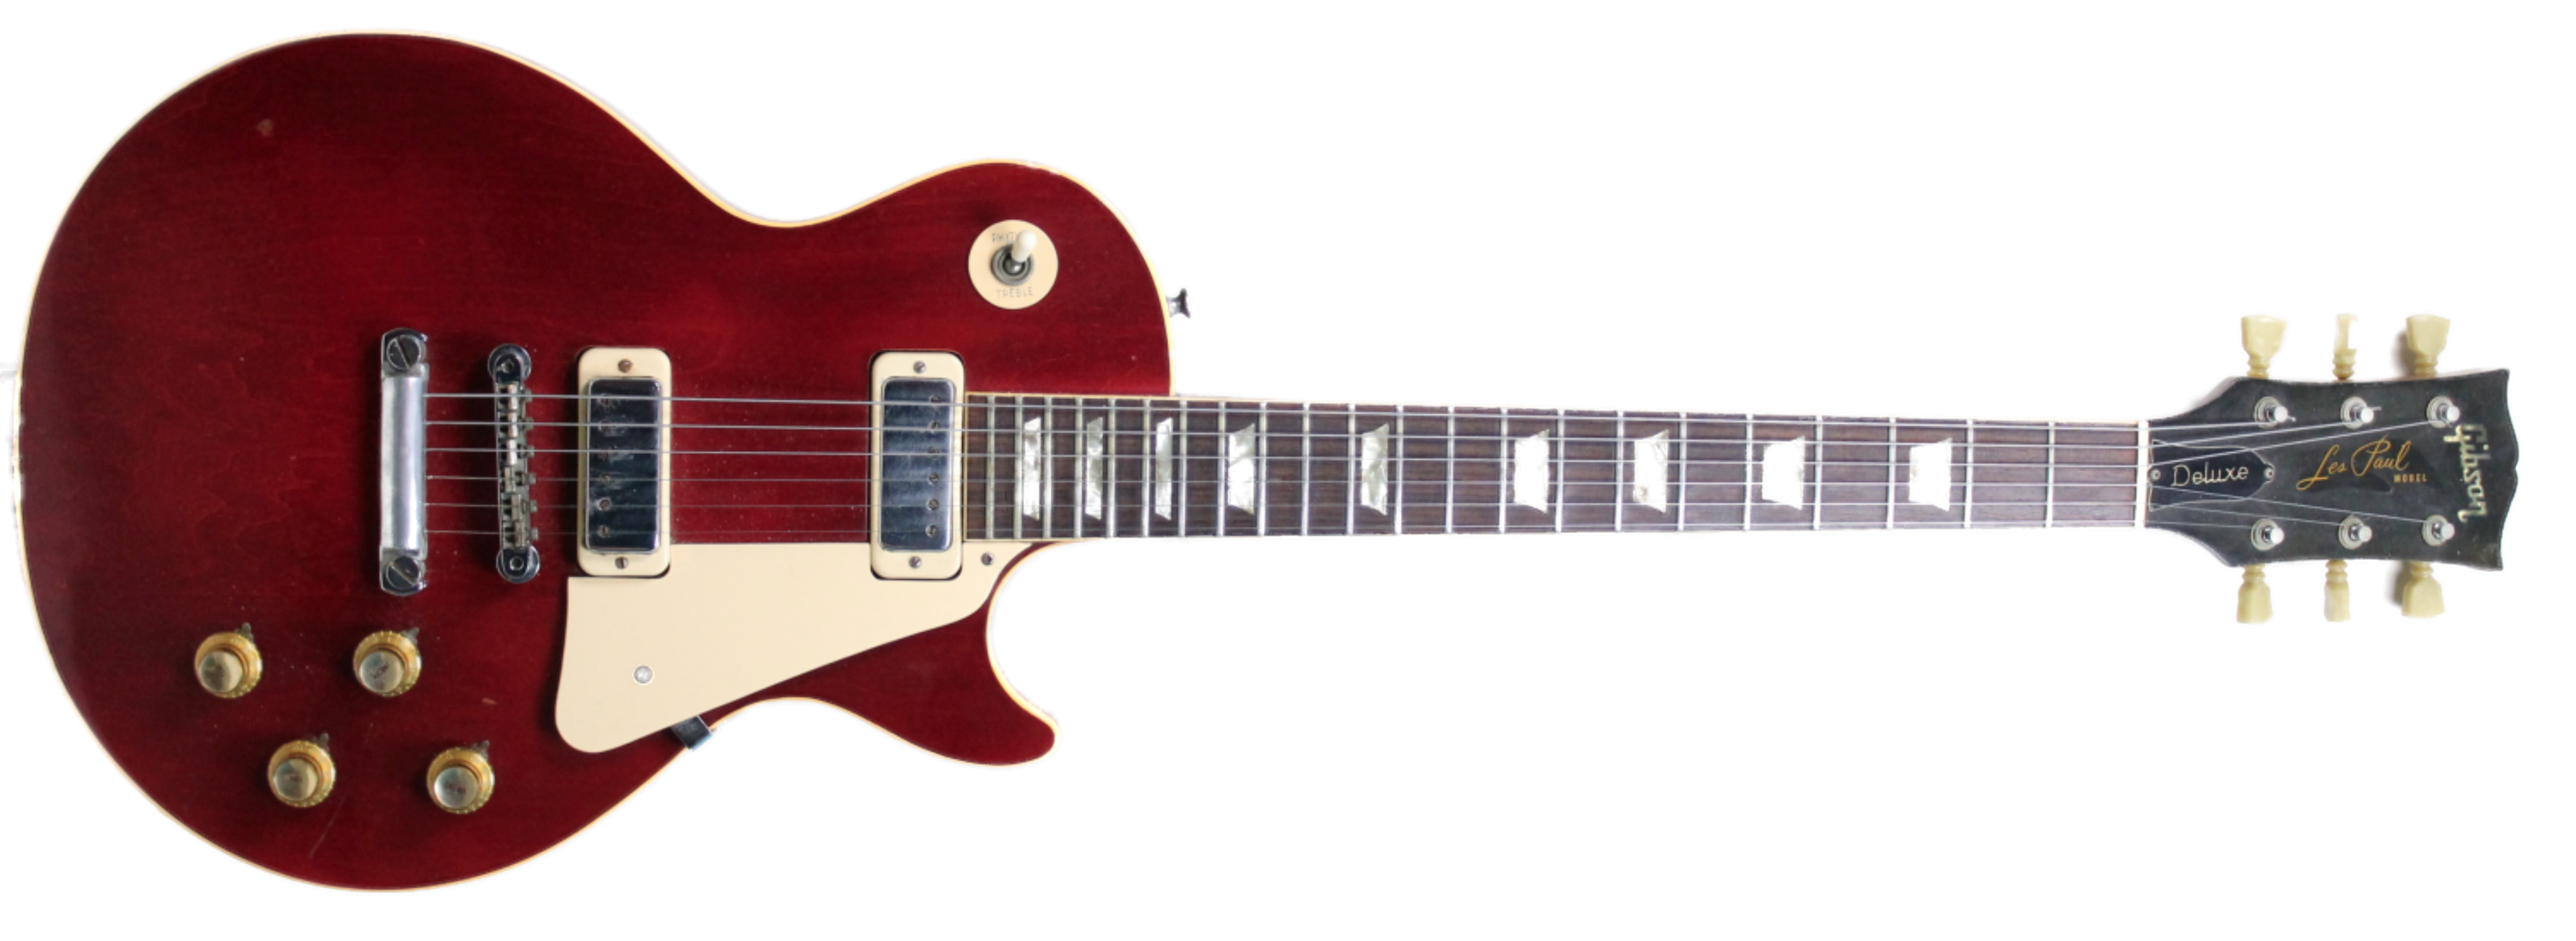 File:Akira Gibson Les Paul Cu